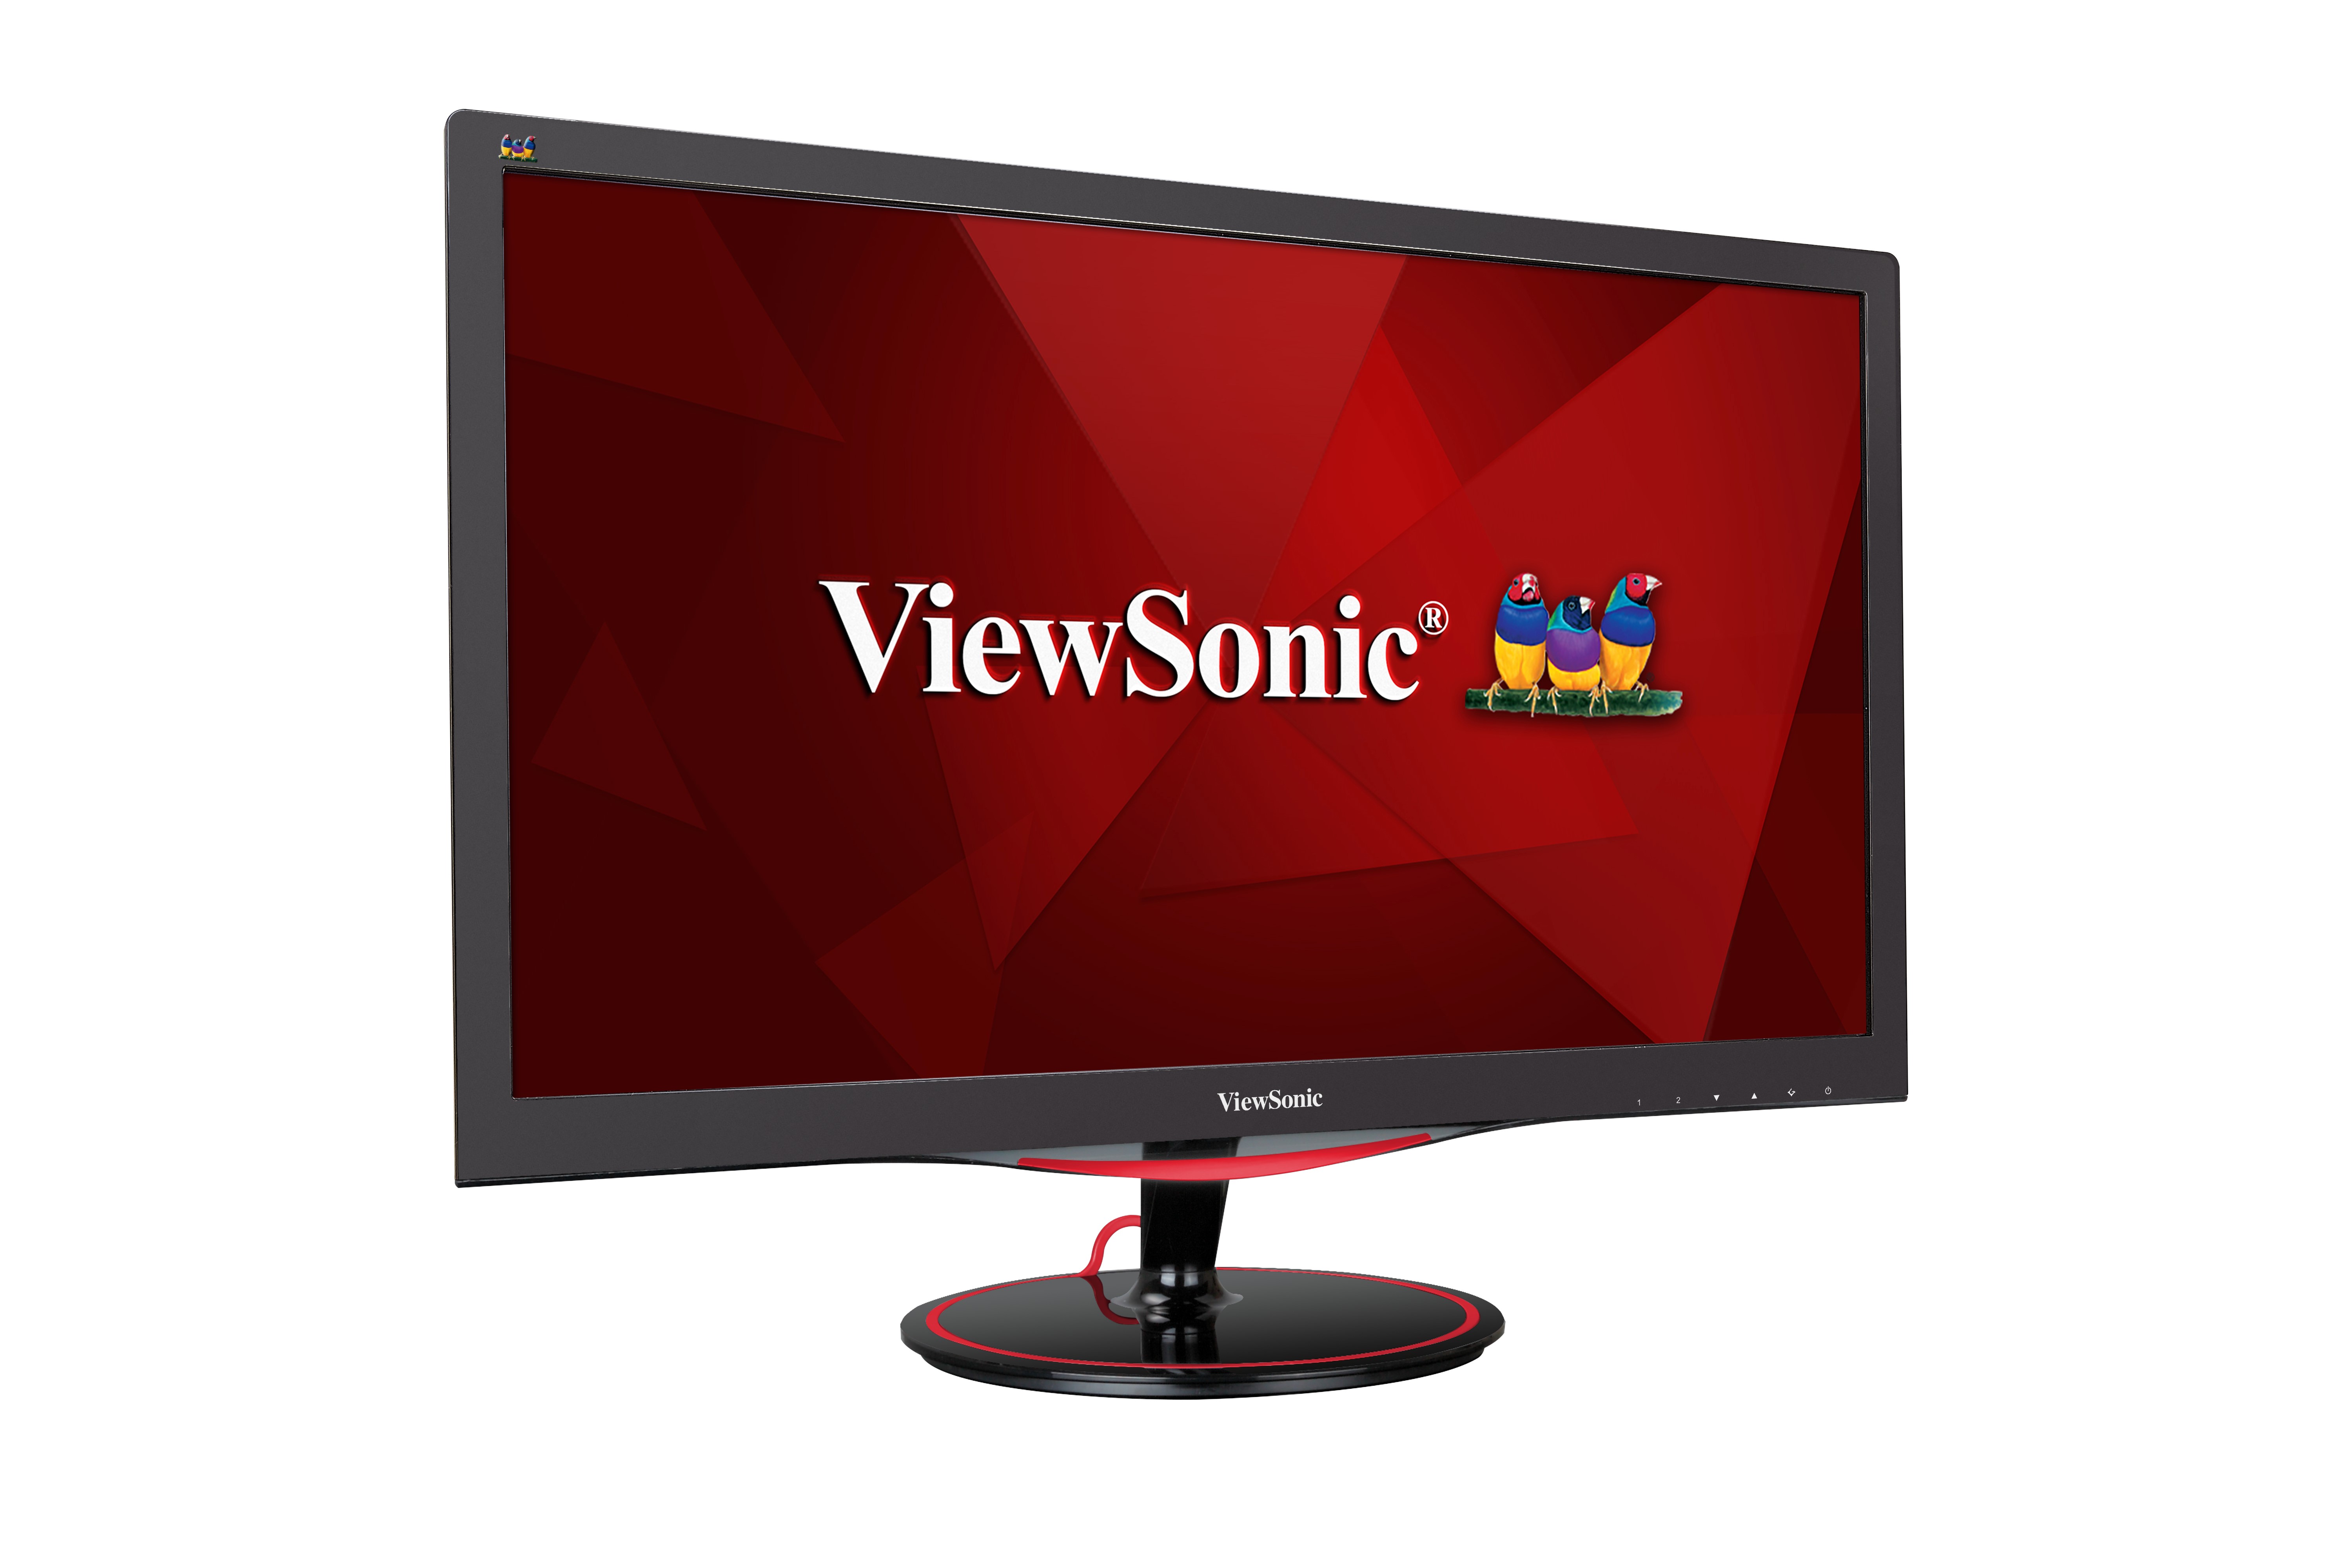 ViewSonic VX2458-mhd-7 monitor - ディスプレイ・モニター本体